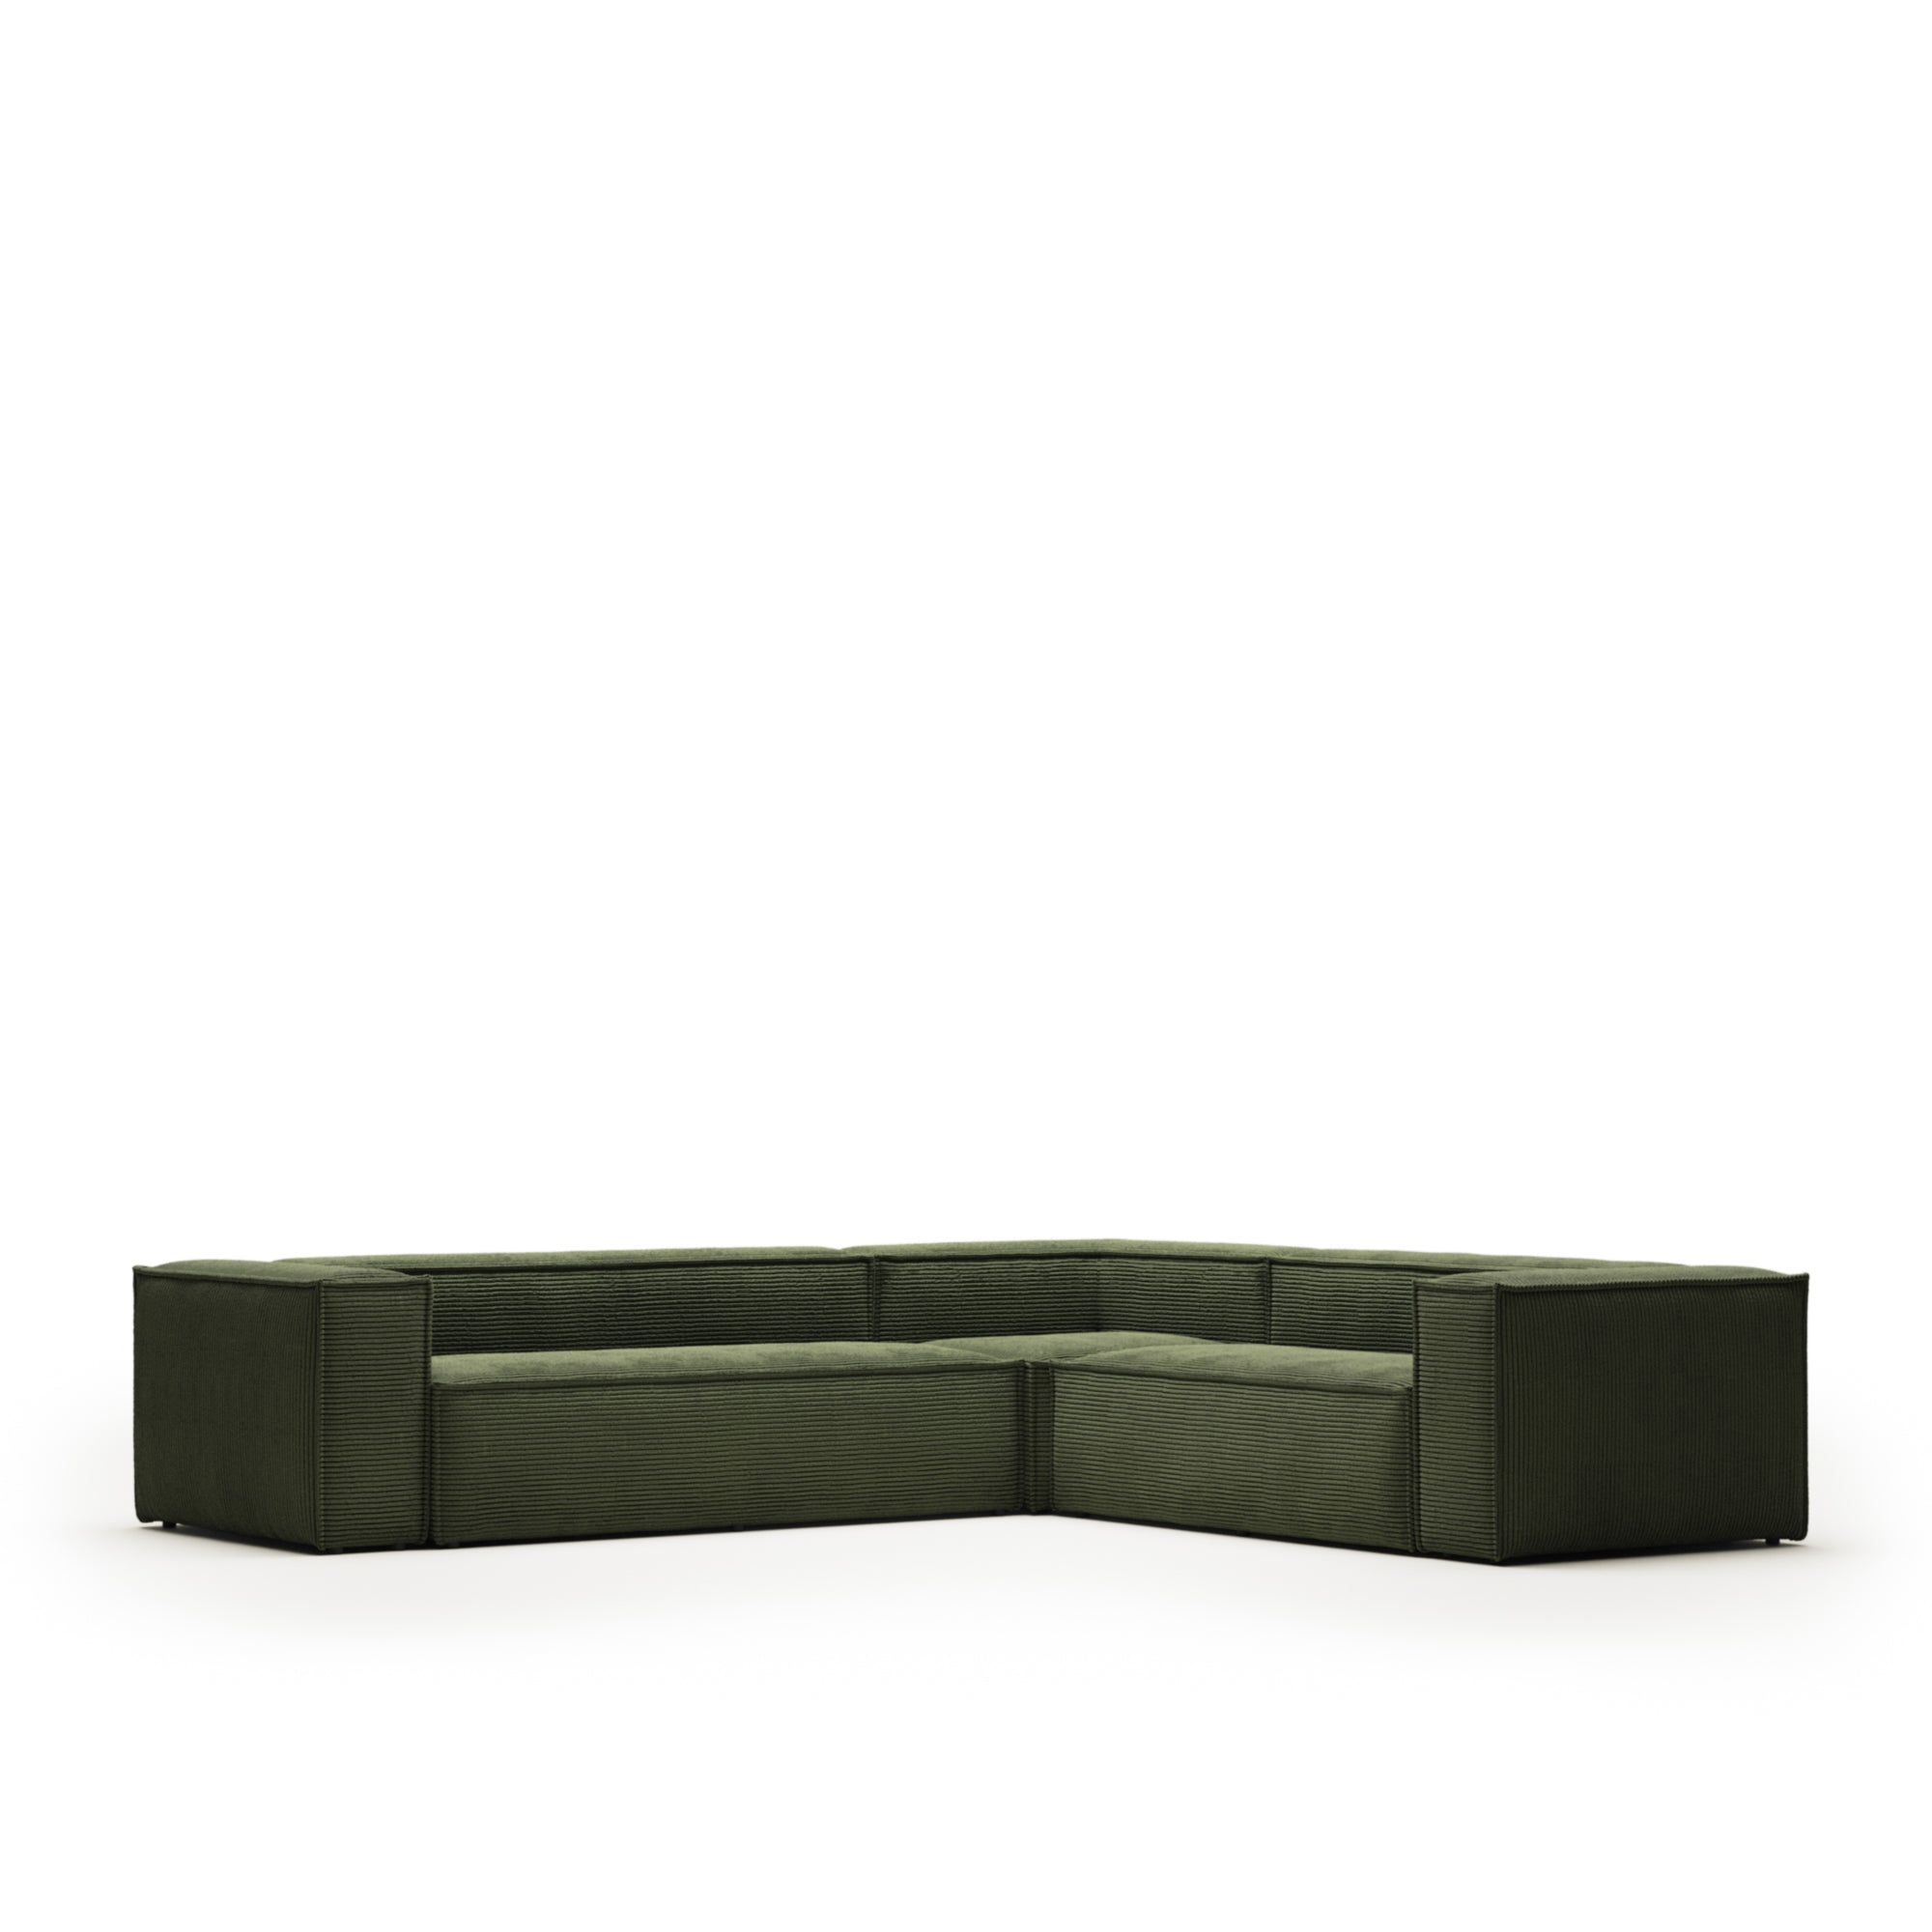 Blok 5 seater corner sofa in green wide seam corduroy, 320 x 290 / 290 x 320 cm